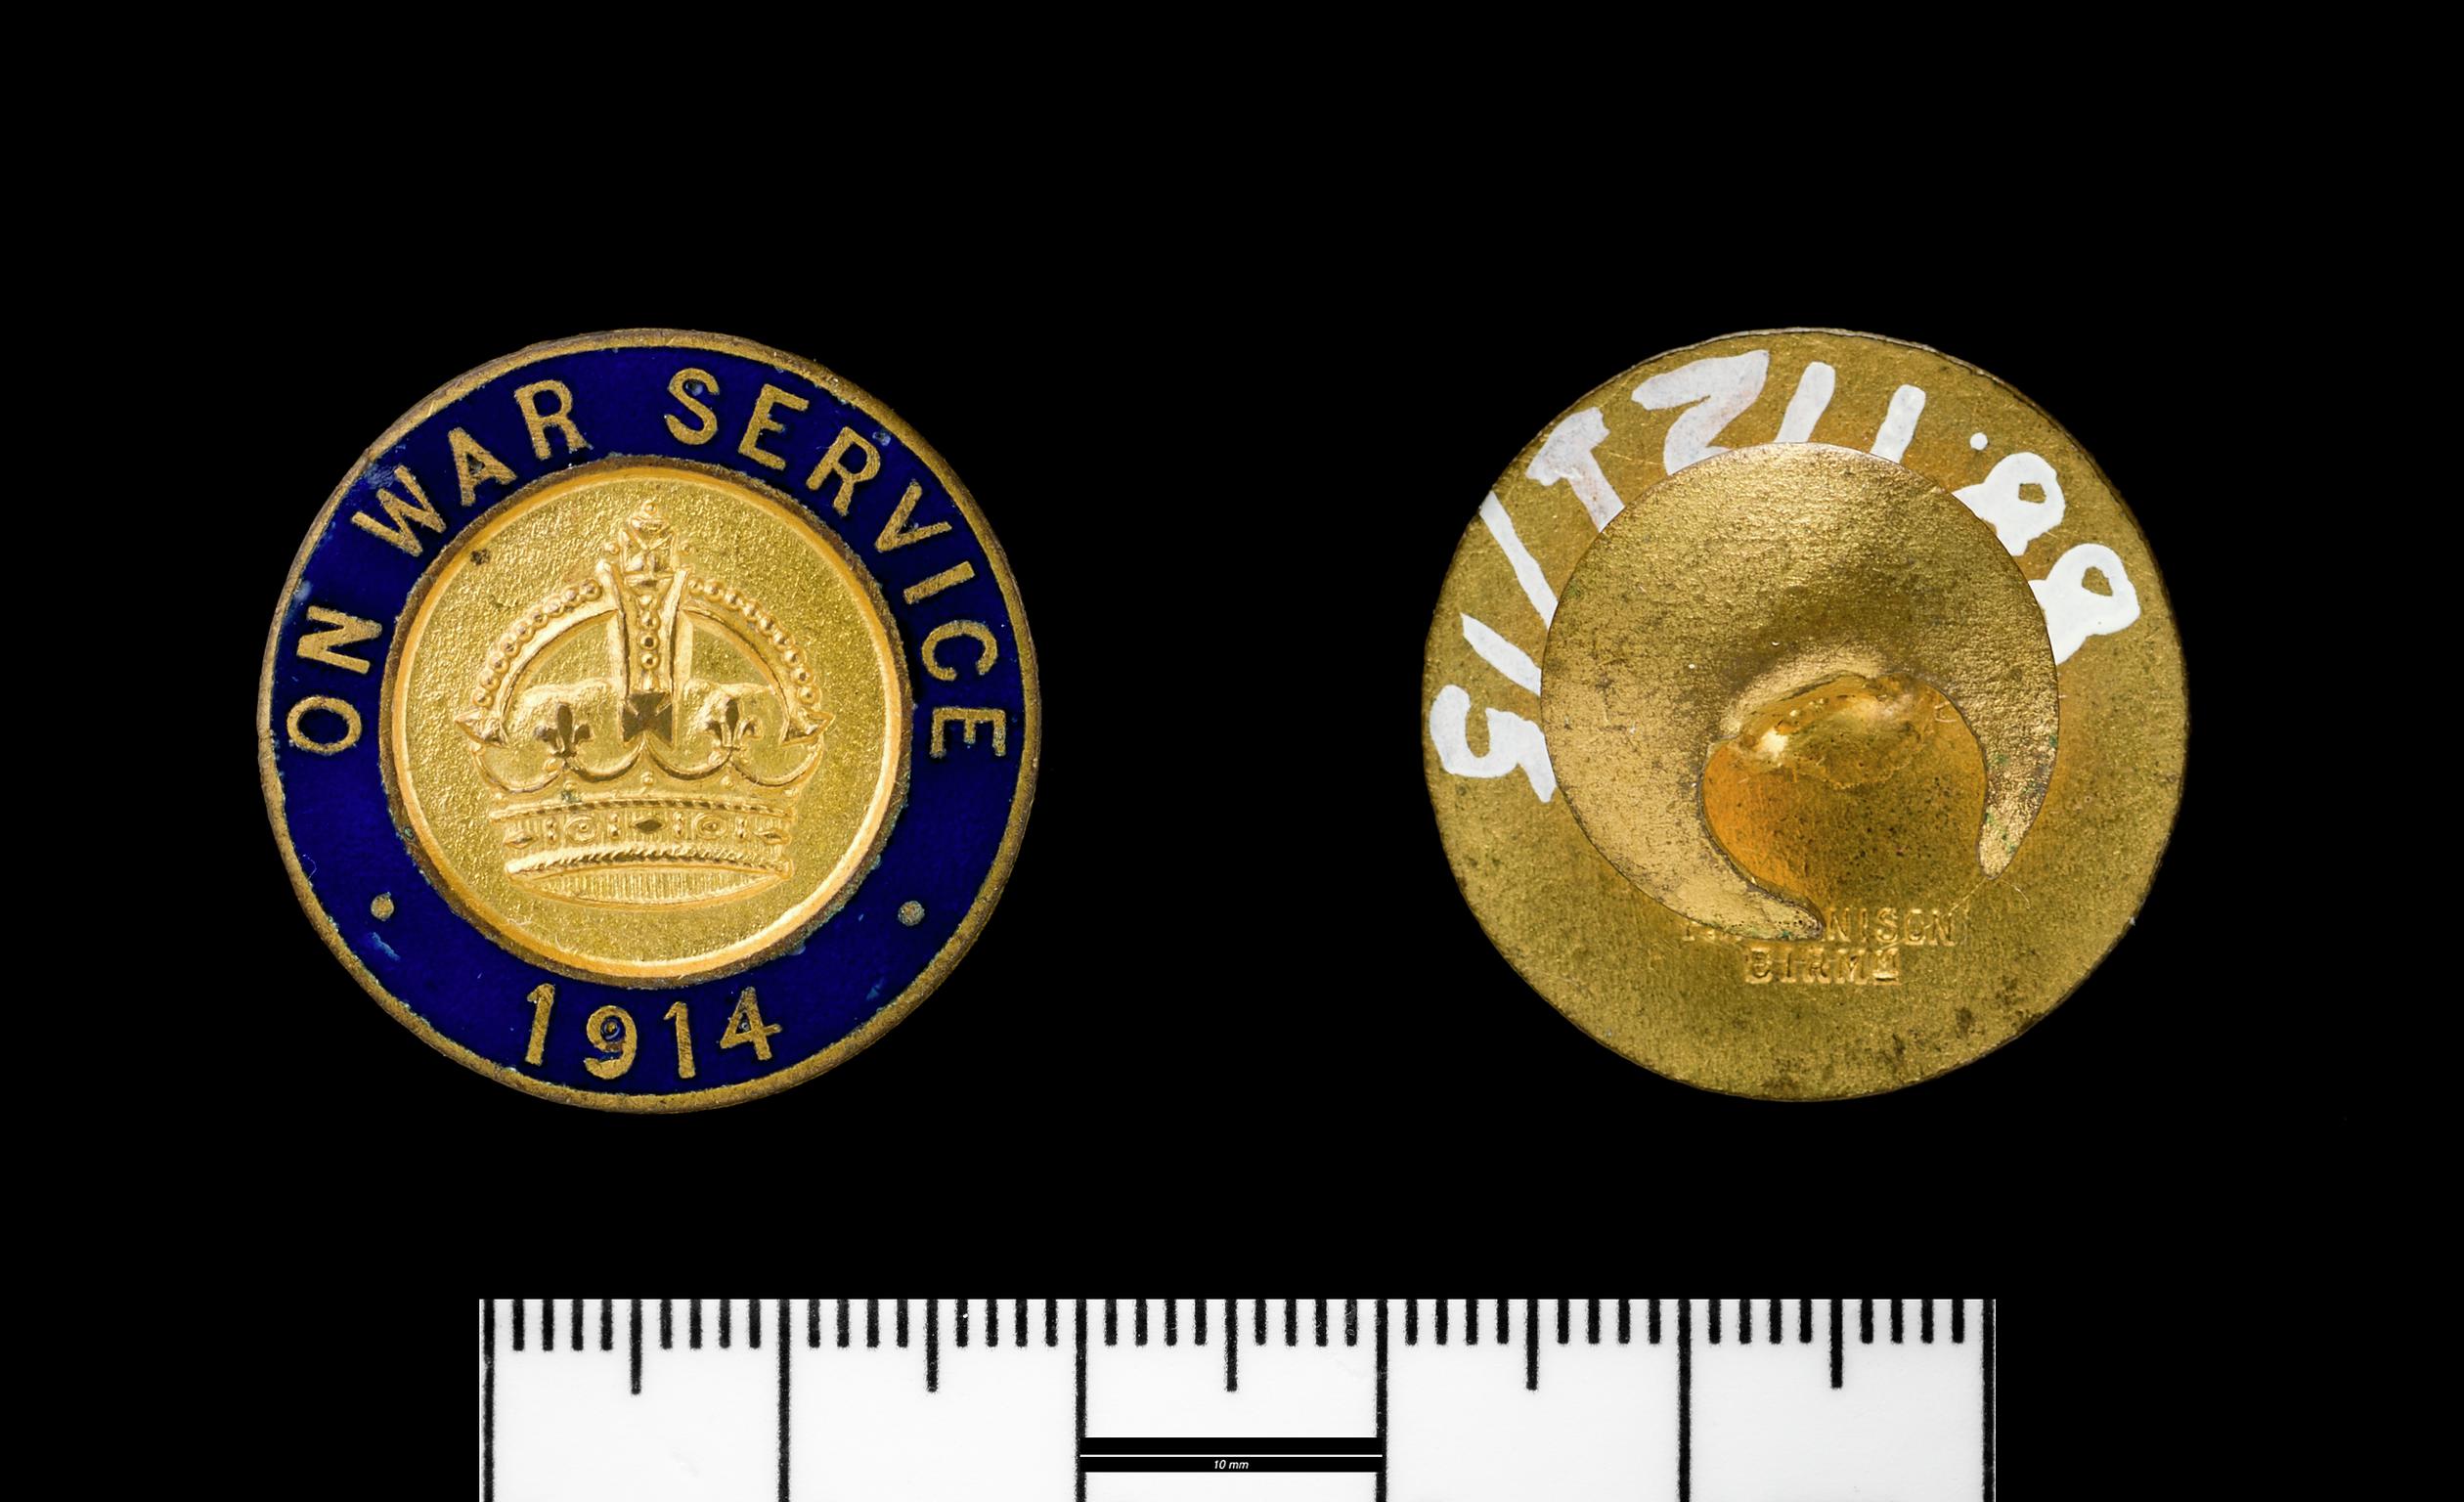 On War Service 1914, badge